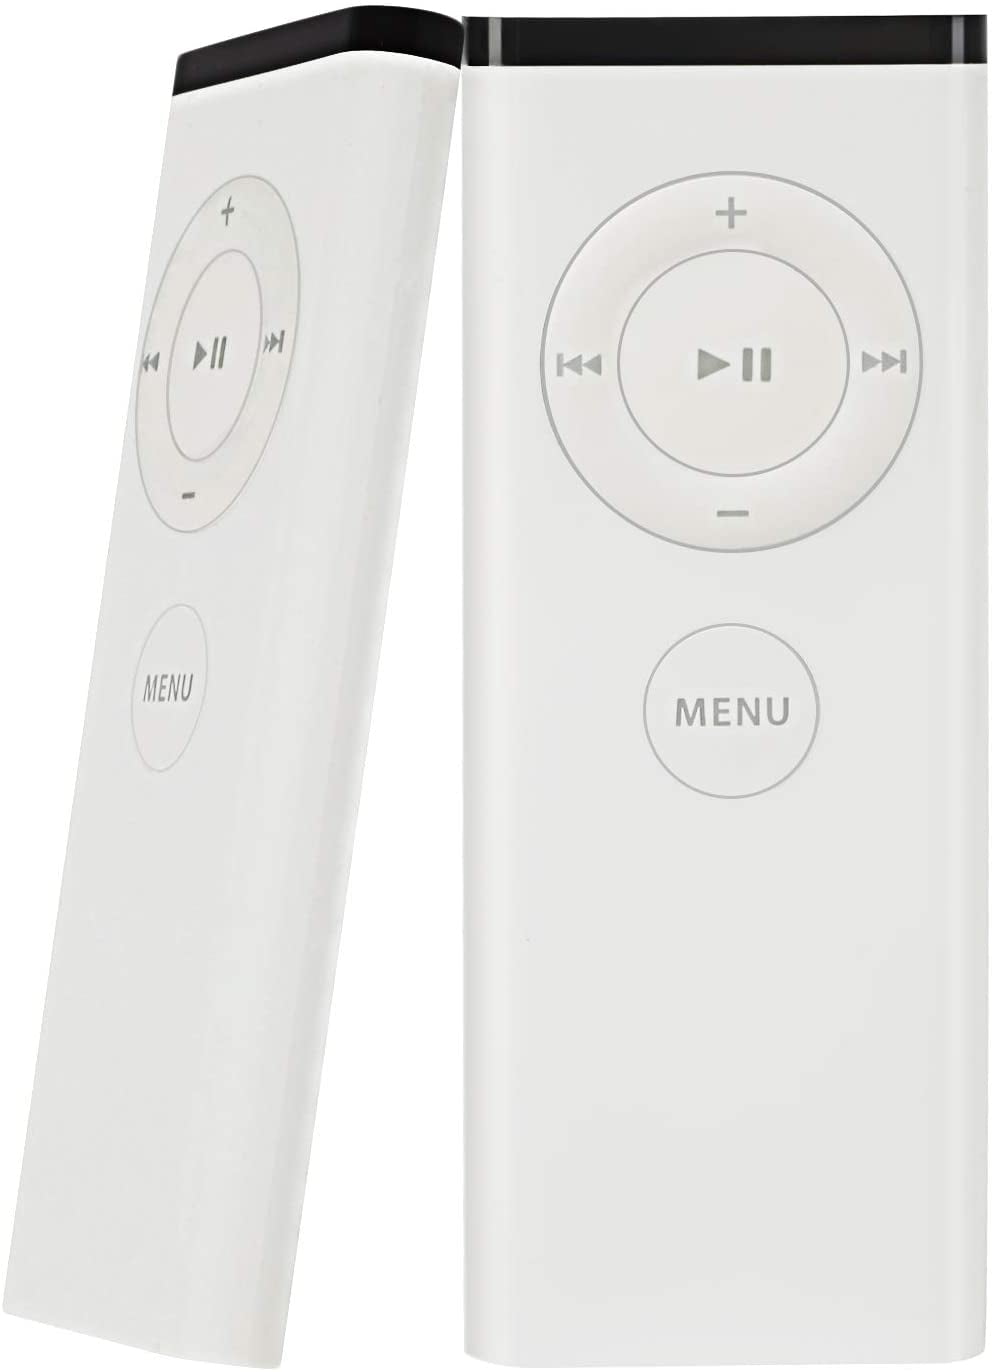 ONE BRAND NEW Genuine Apple Remote for iPod iMac MacBook Pro Mac Mini A1156 TV 